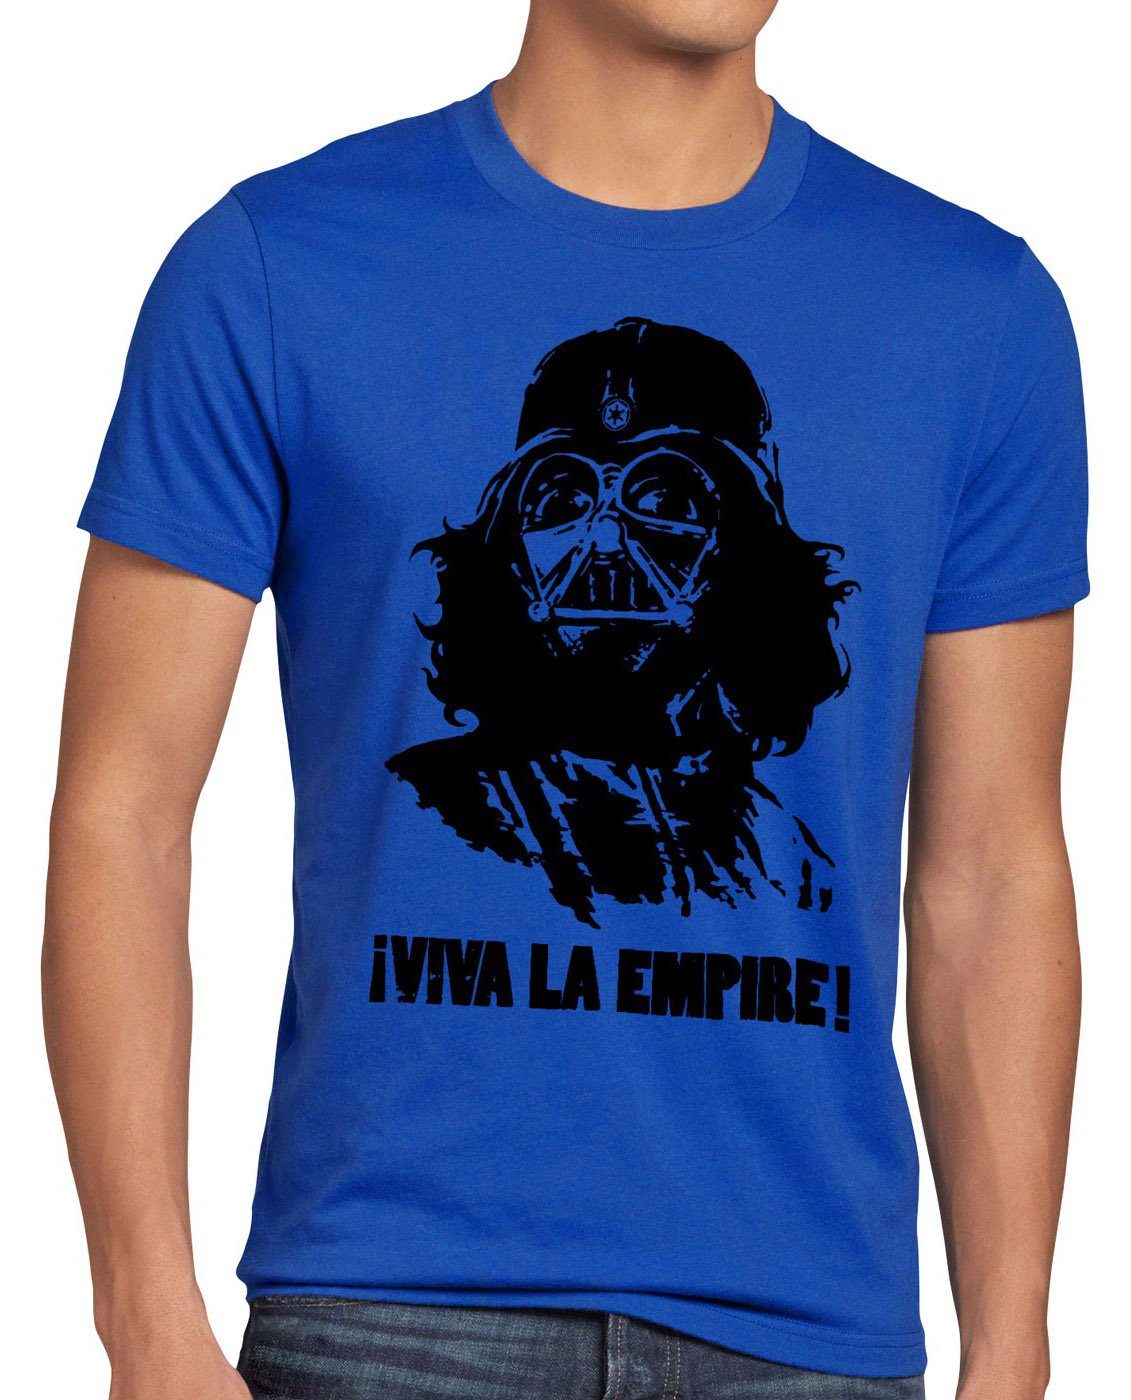 T-Shirt Viva guevara revolution vader che Print-Shirt grau star kuba darth wars meliert Imperium style3 Herren